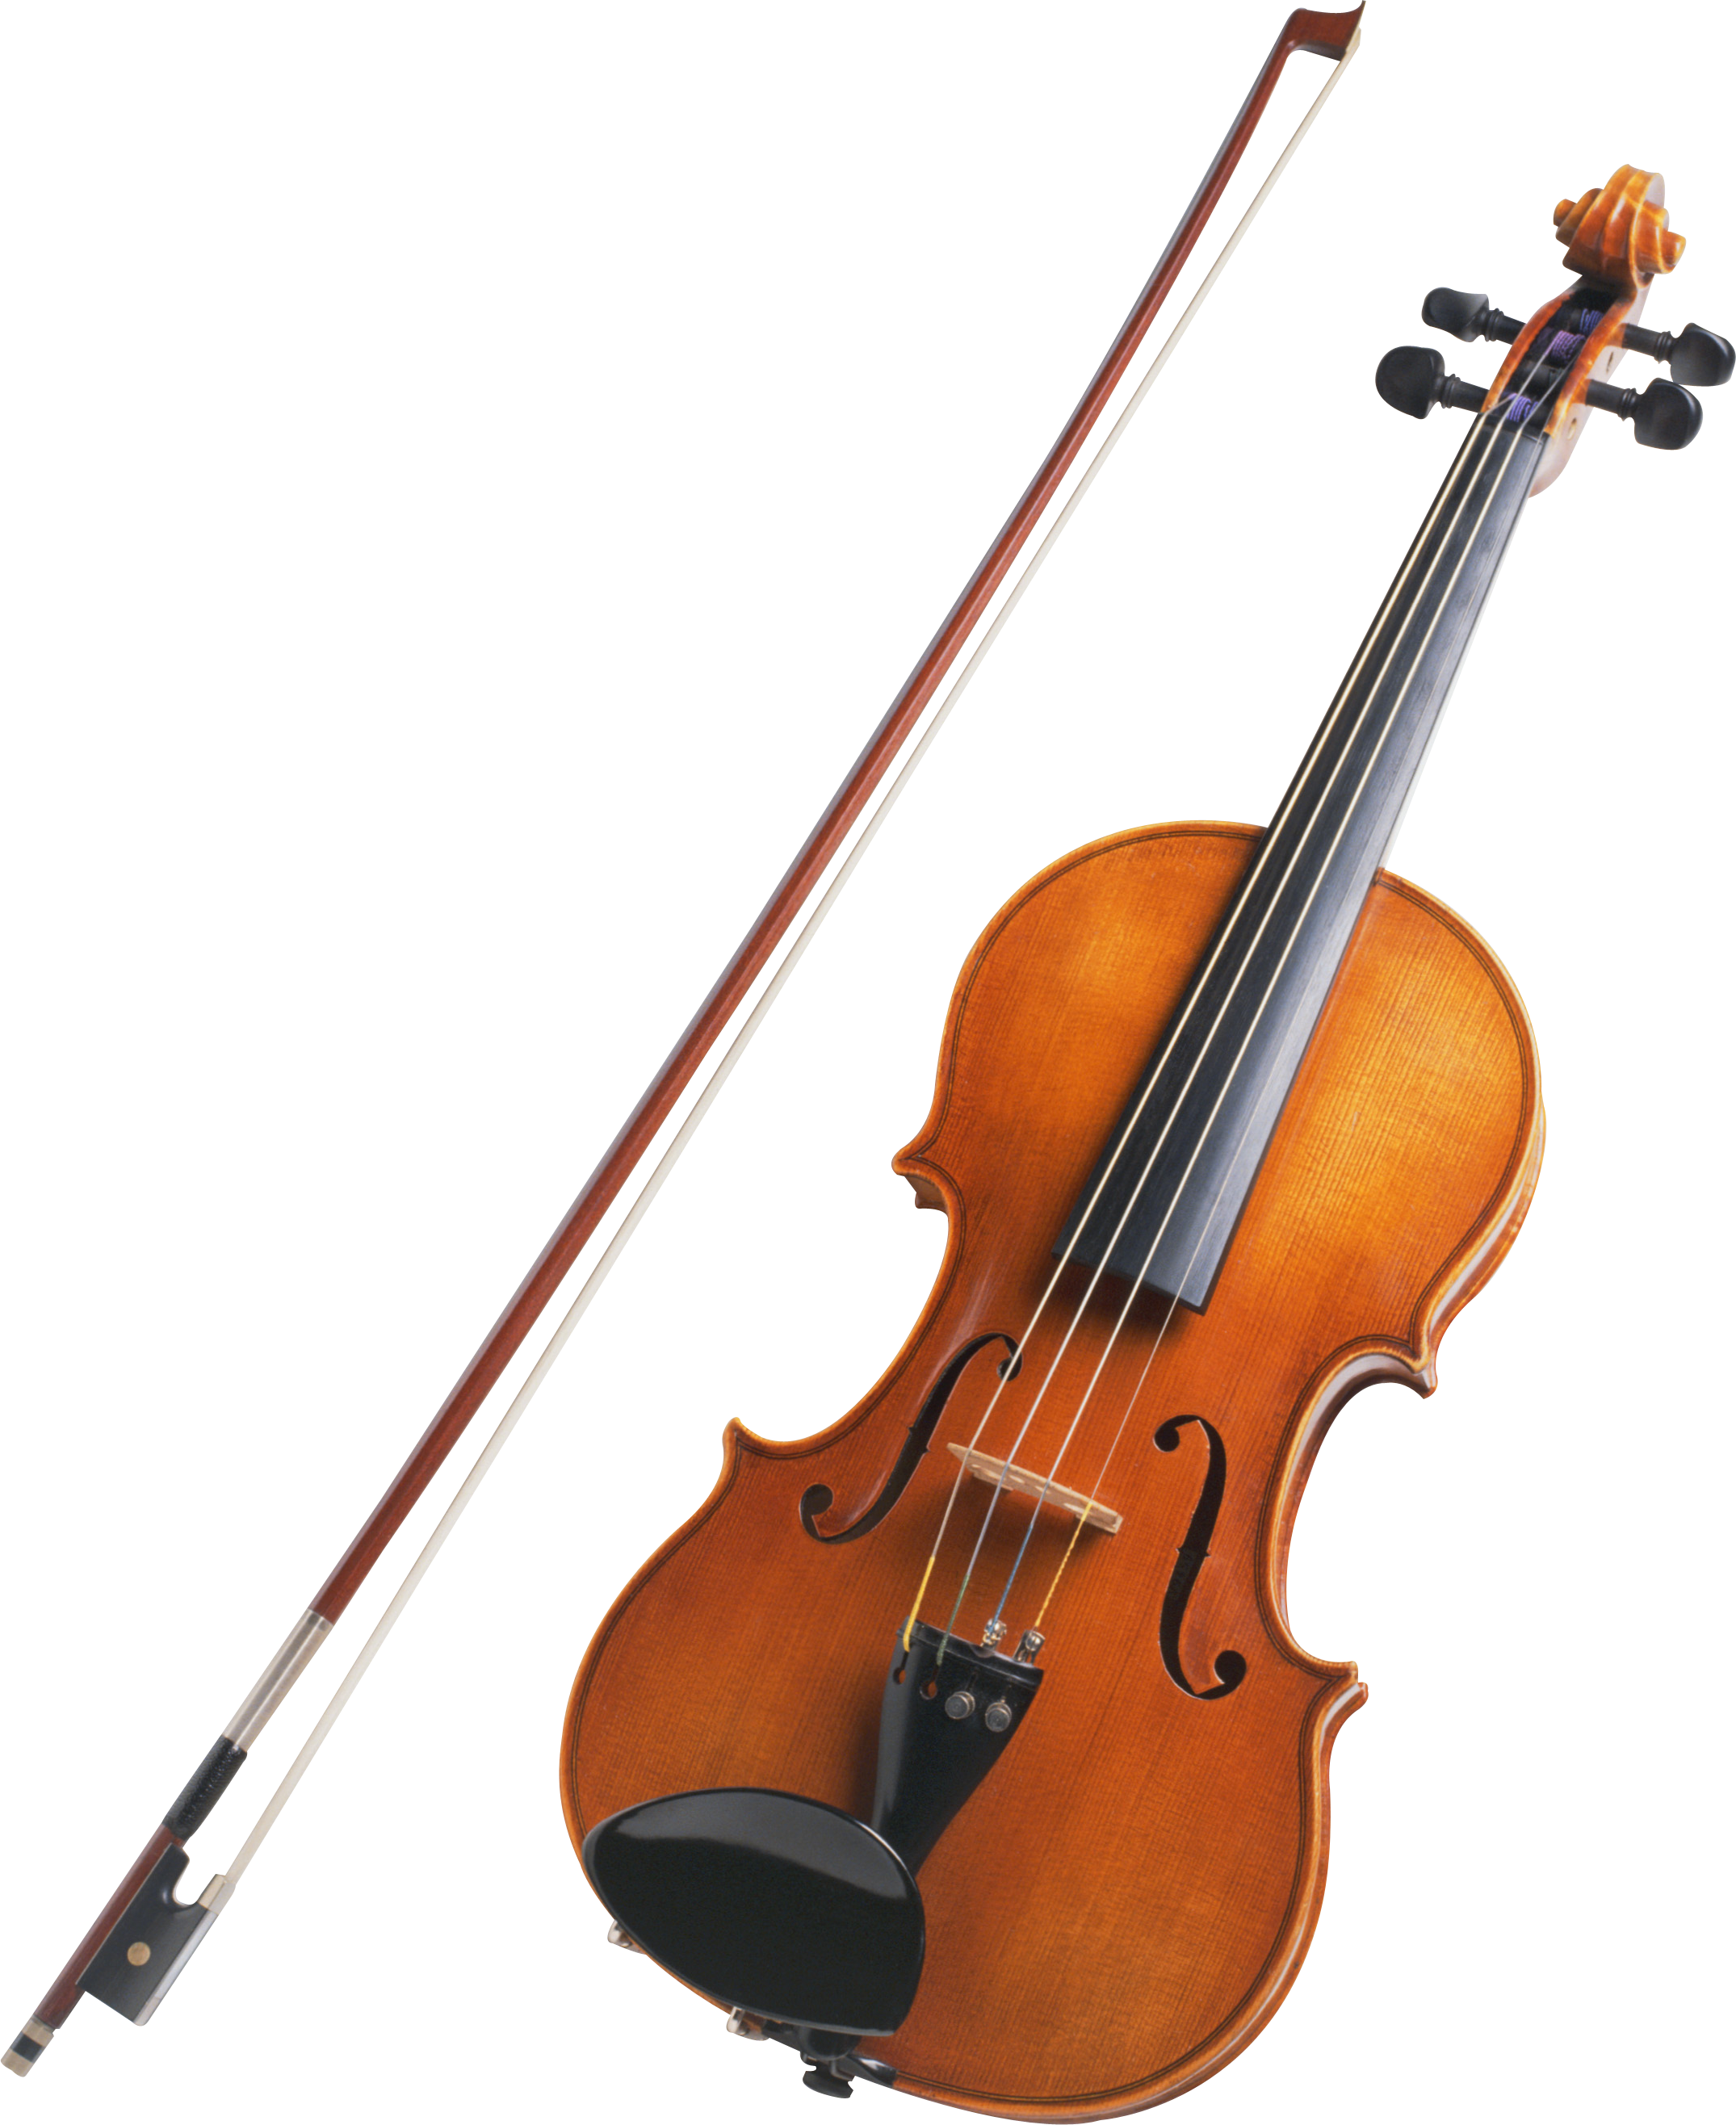 Violin PNG images free download violin PNG